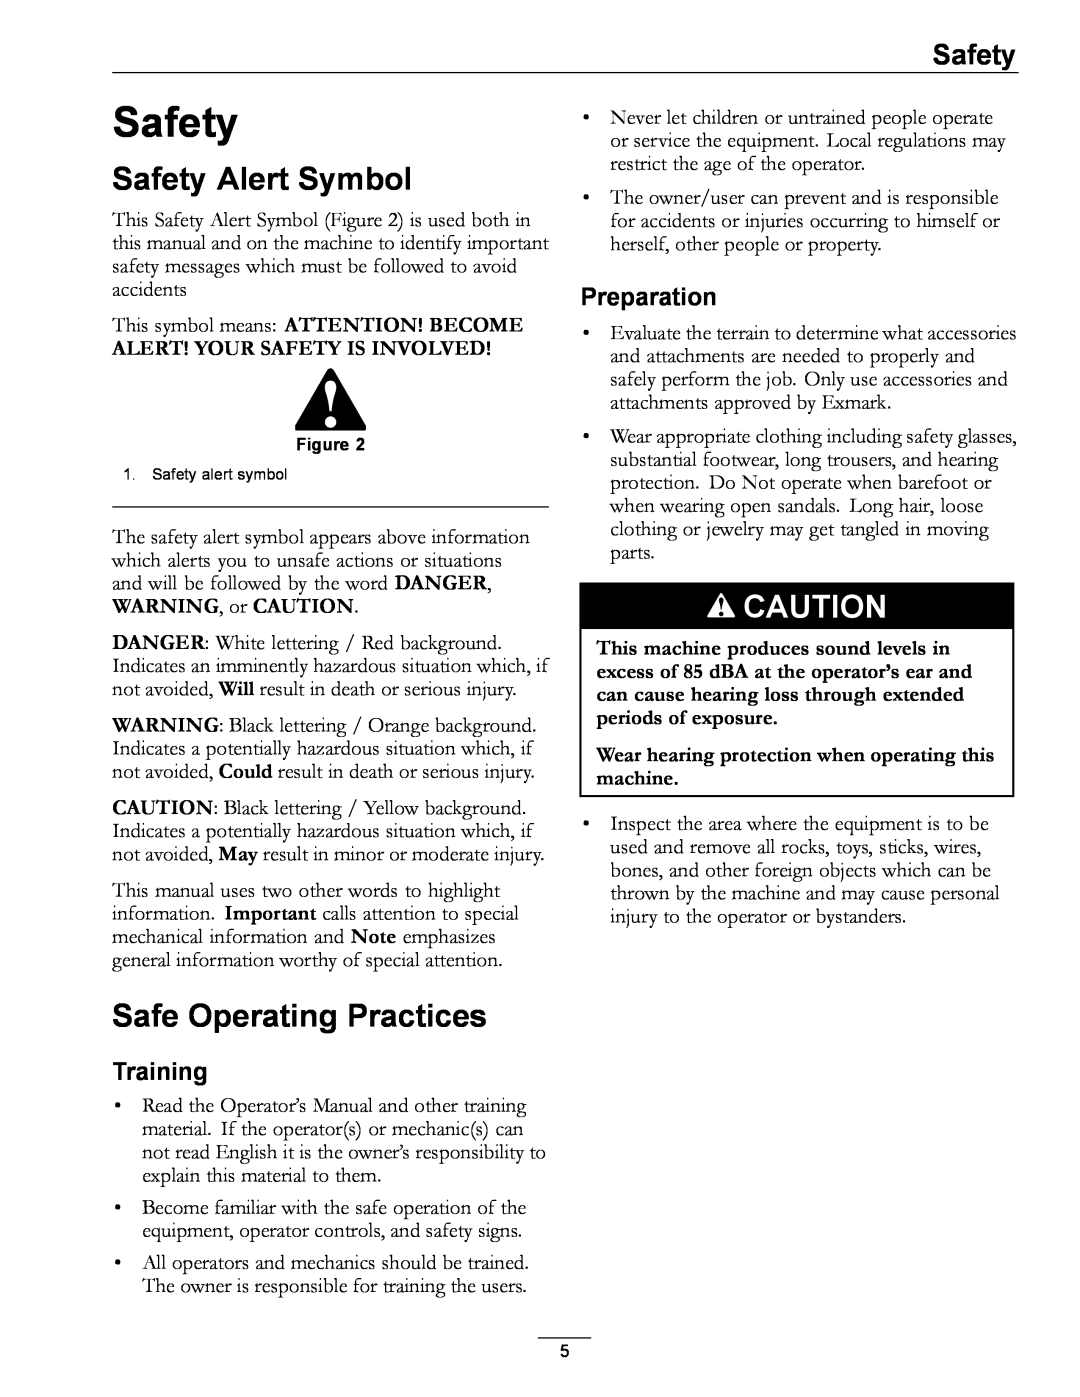 Exmark PHZ19KA343 Safety Alert Symbol, Safe Operating Practices, Training, Preparation, Alert! Your Safety Is Involved 